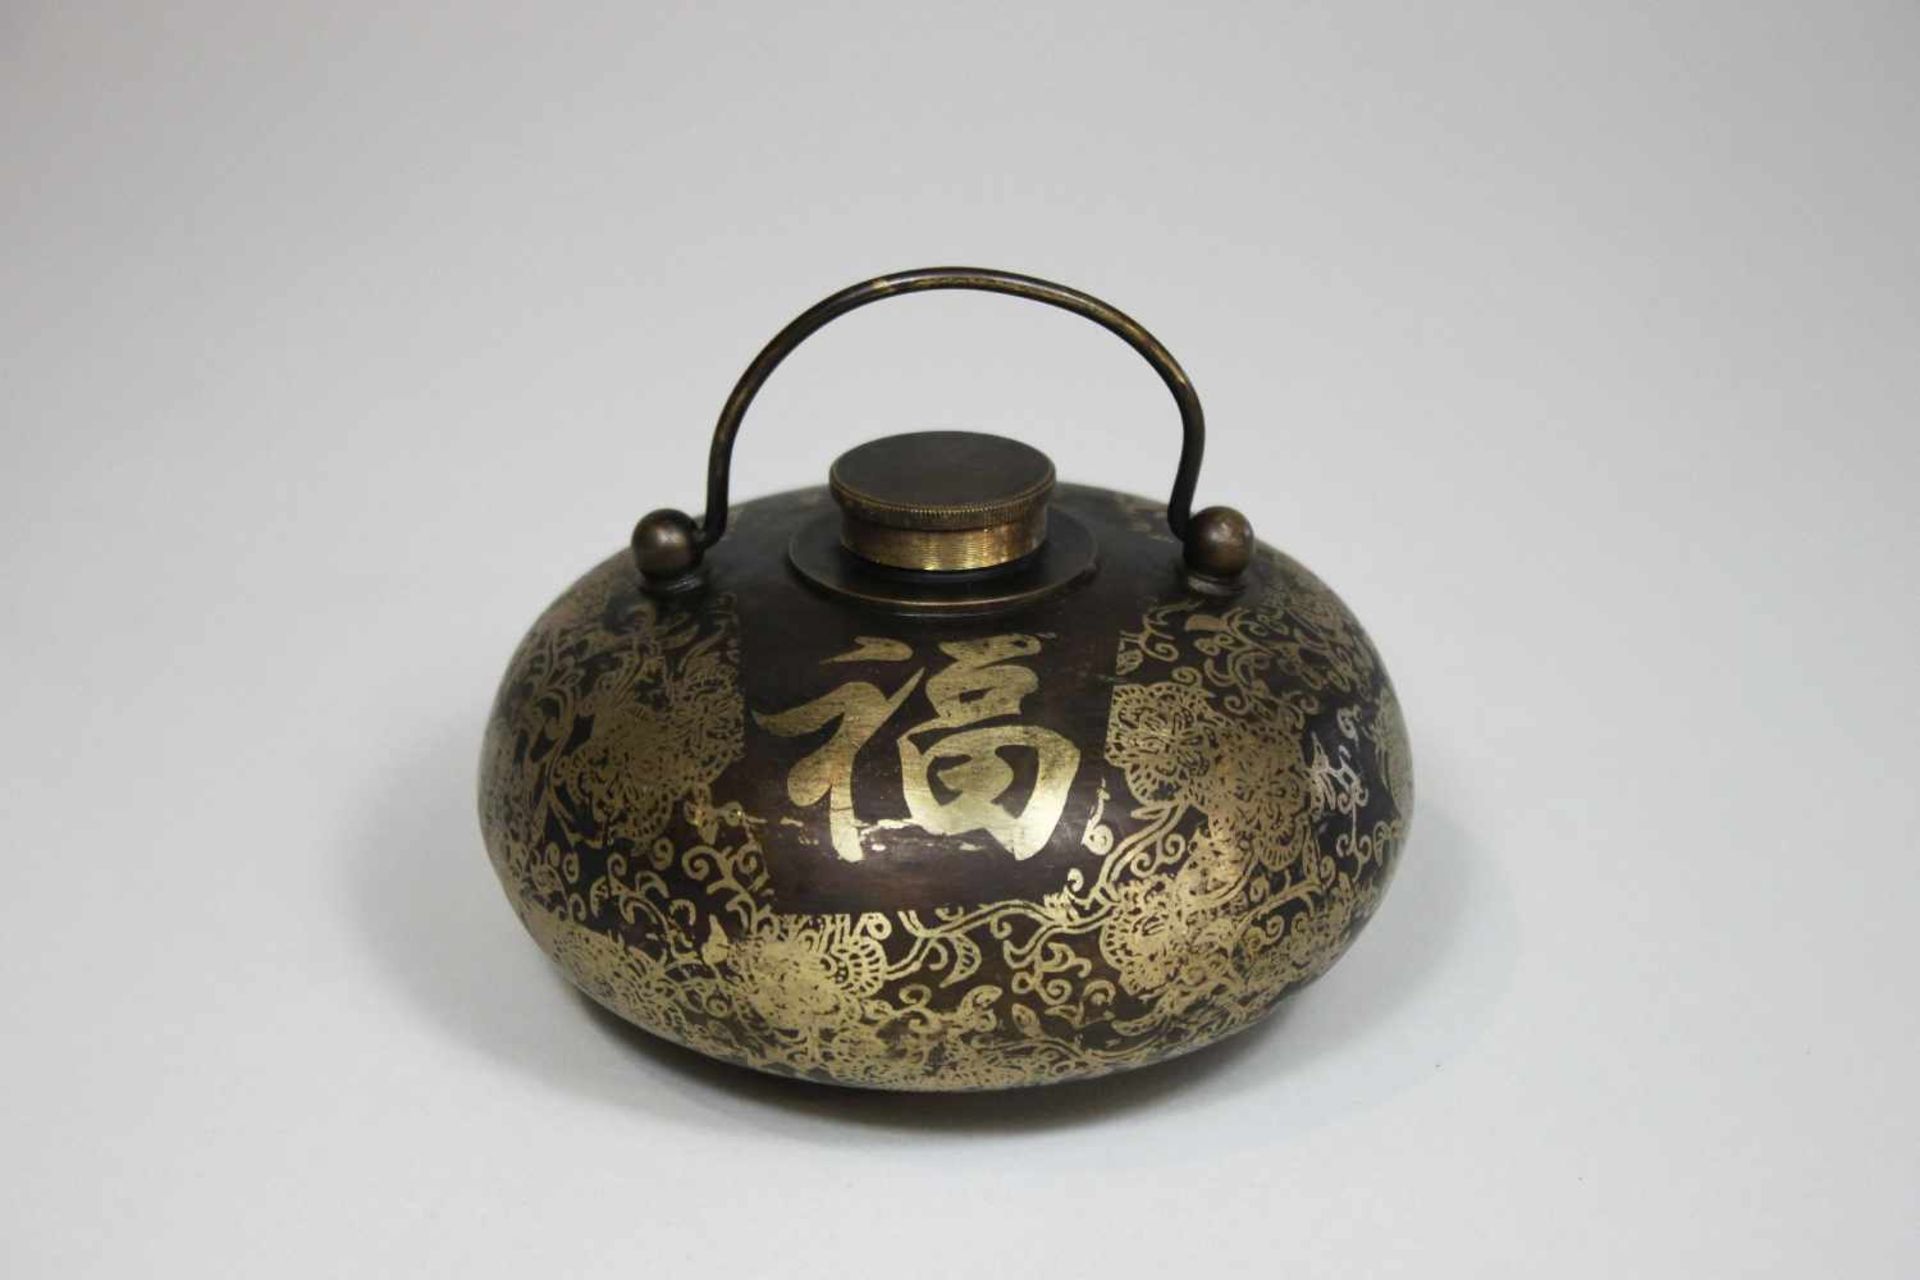 Kleiner Bettwärmer, Japan, Messing, florales Dekor, jap. Inschrift auf dem oberen Teil. H.: 8 cm,